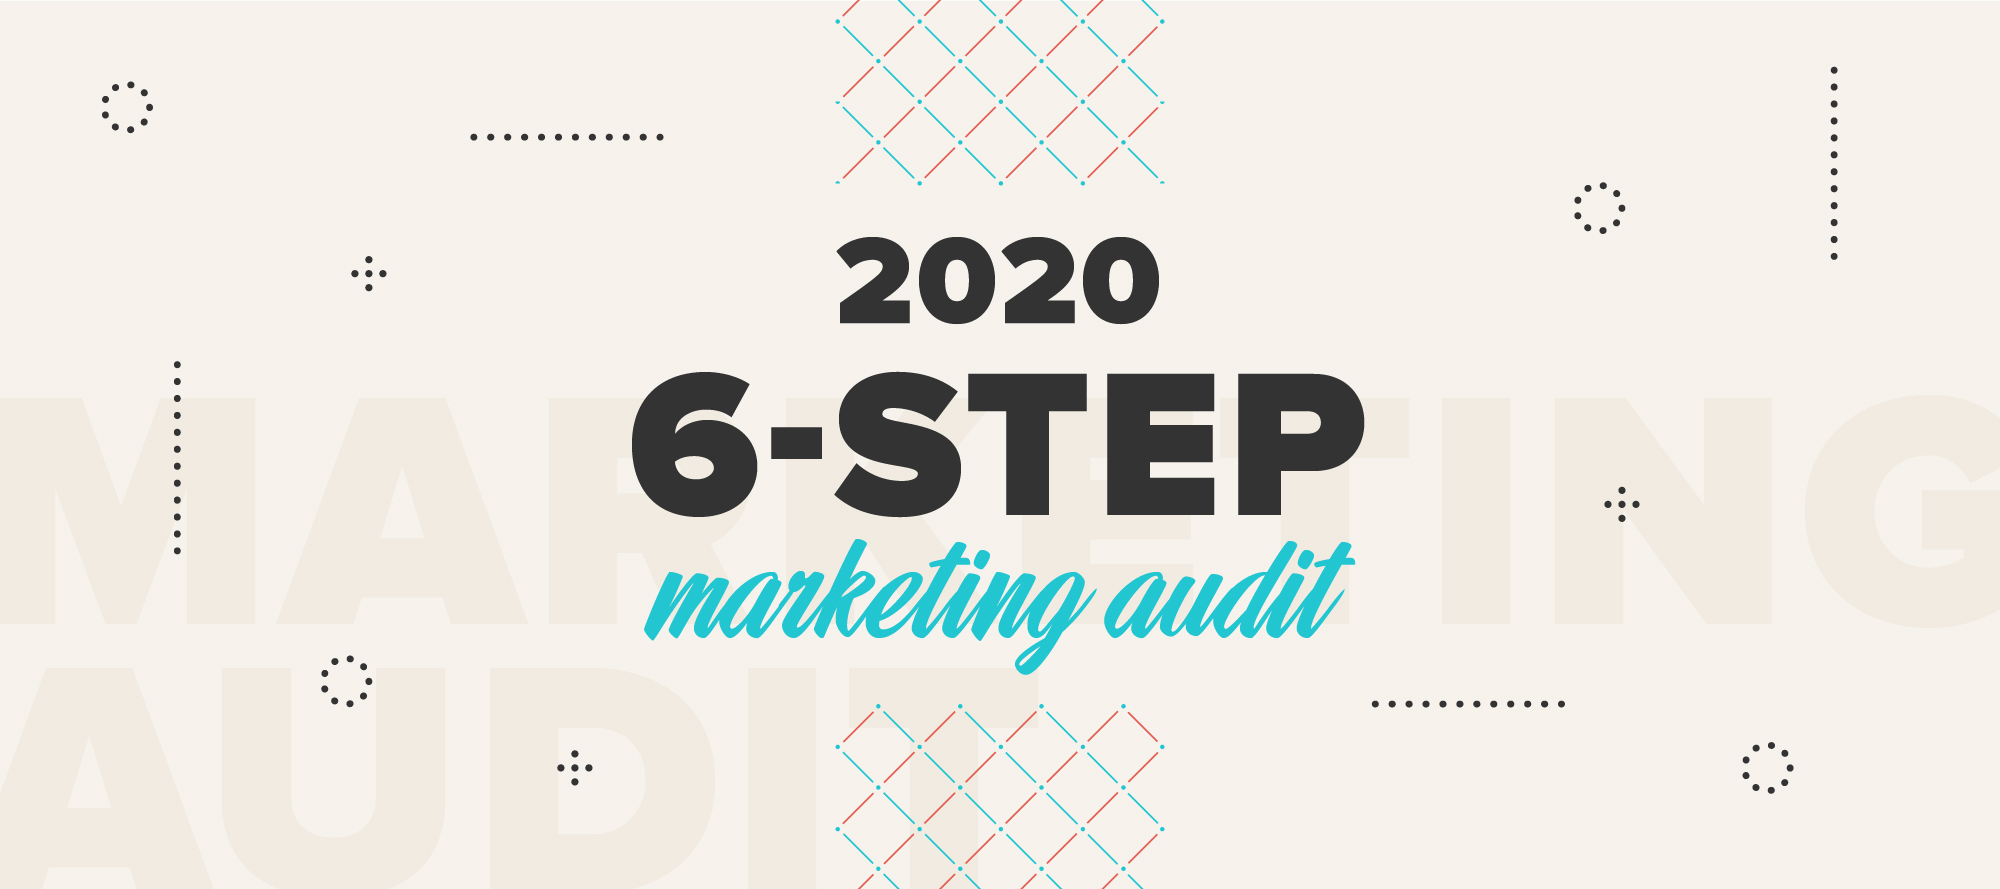 2020 6 Step Marketing Audit